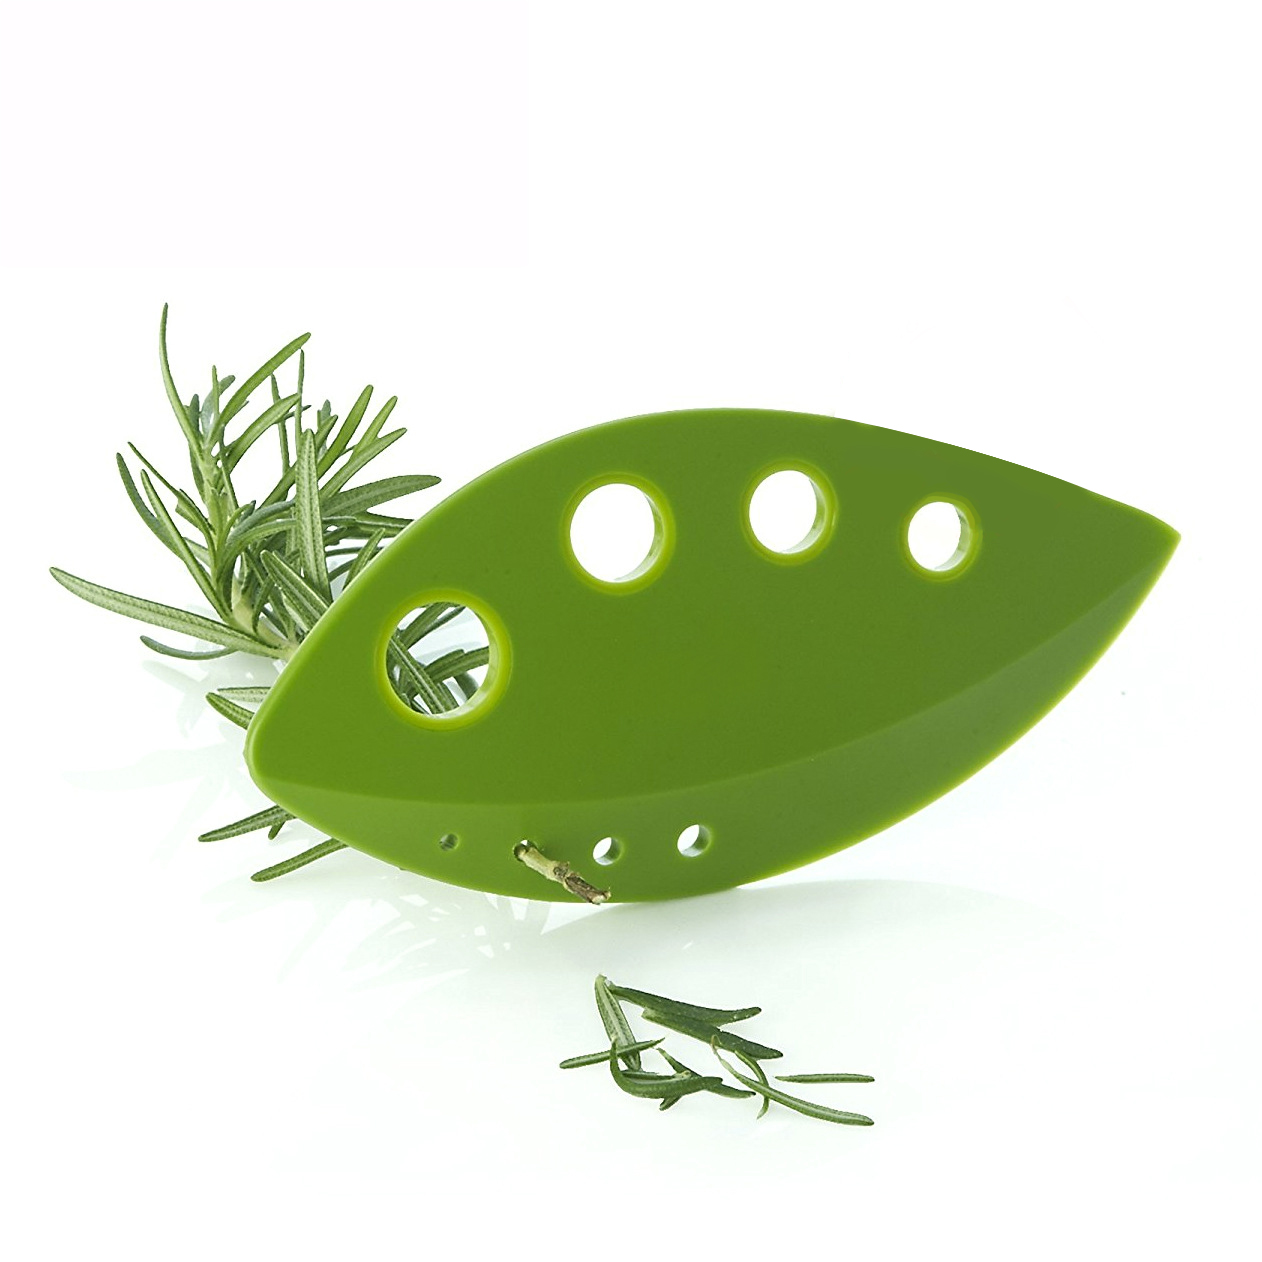 Plastic Leaves Remover Kale Chard Collard Loose Herb Vegetable Leaf Stripping Device